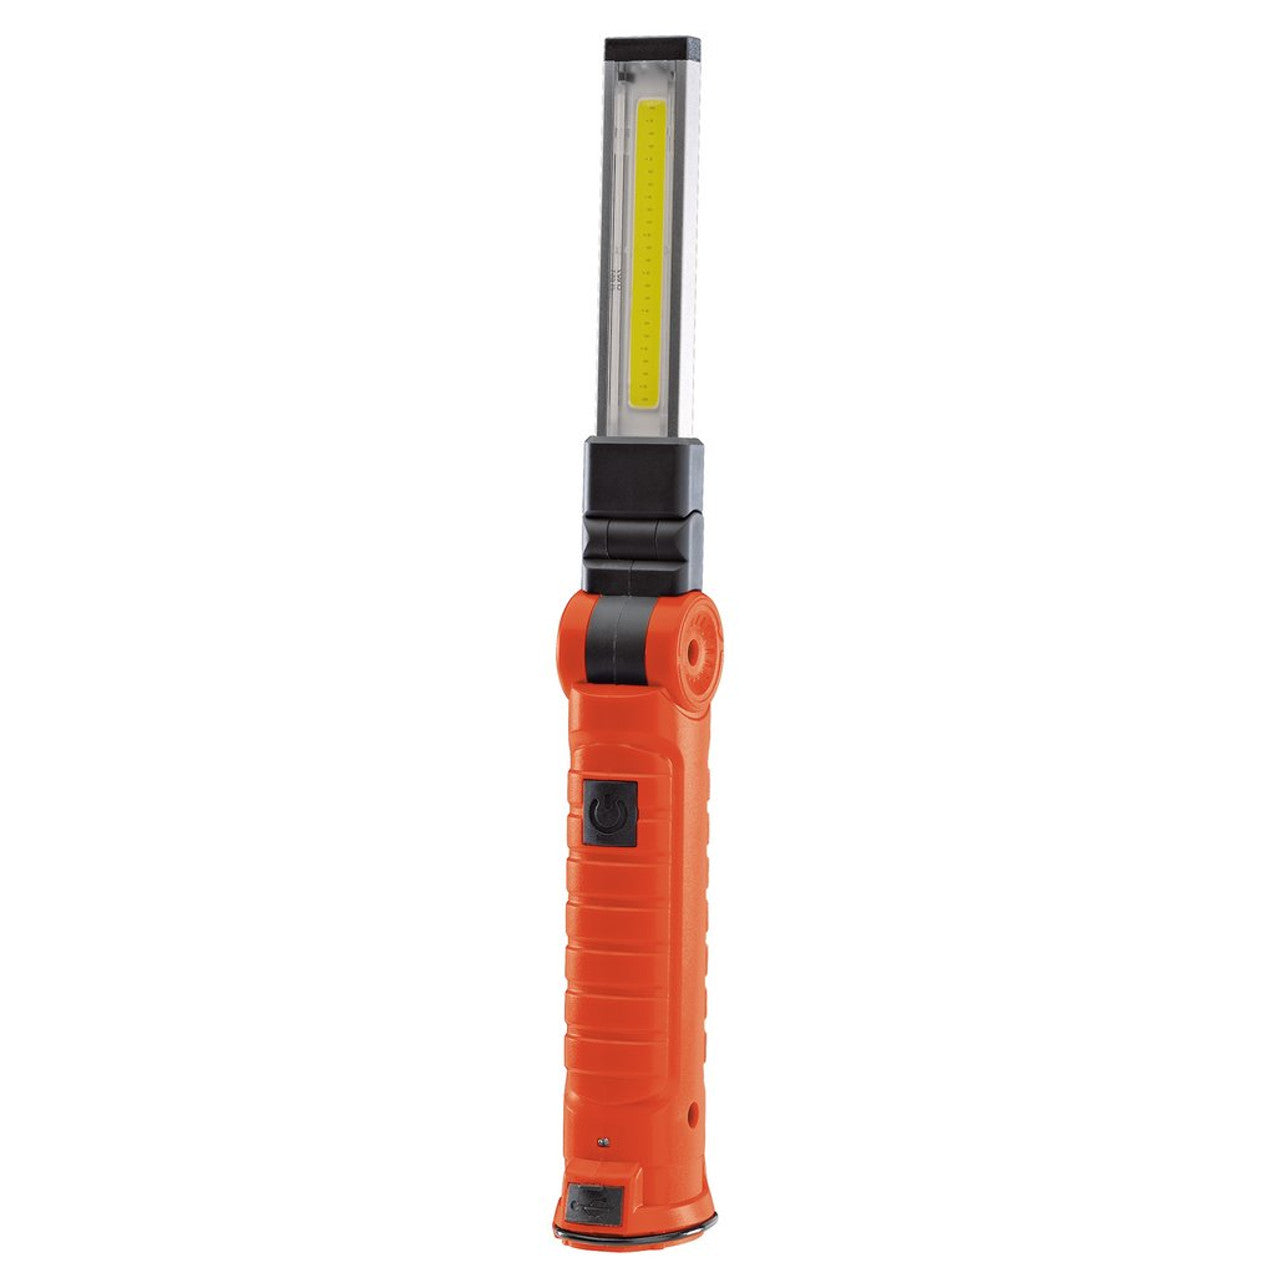 Draper COB/SMD LED Rechargeable Slimline Inspection Lamp, 3W, 240 Lumens, Orange